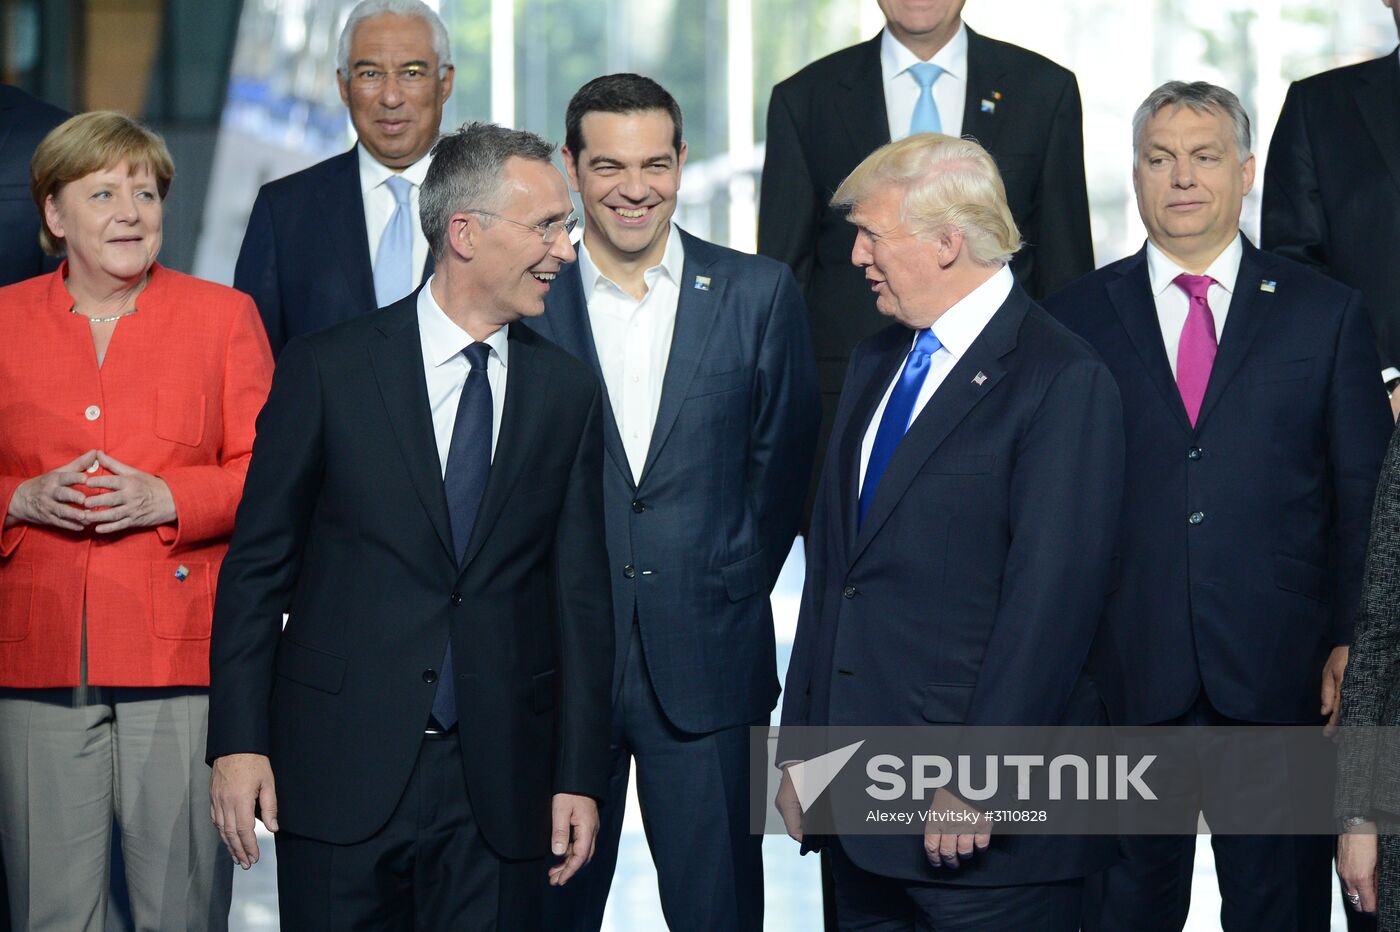 NATO summit in Brussels